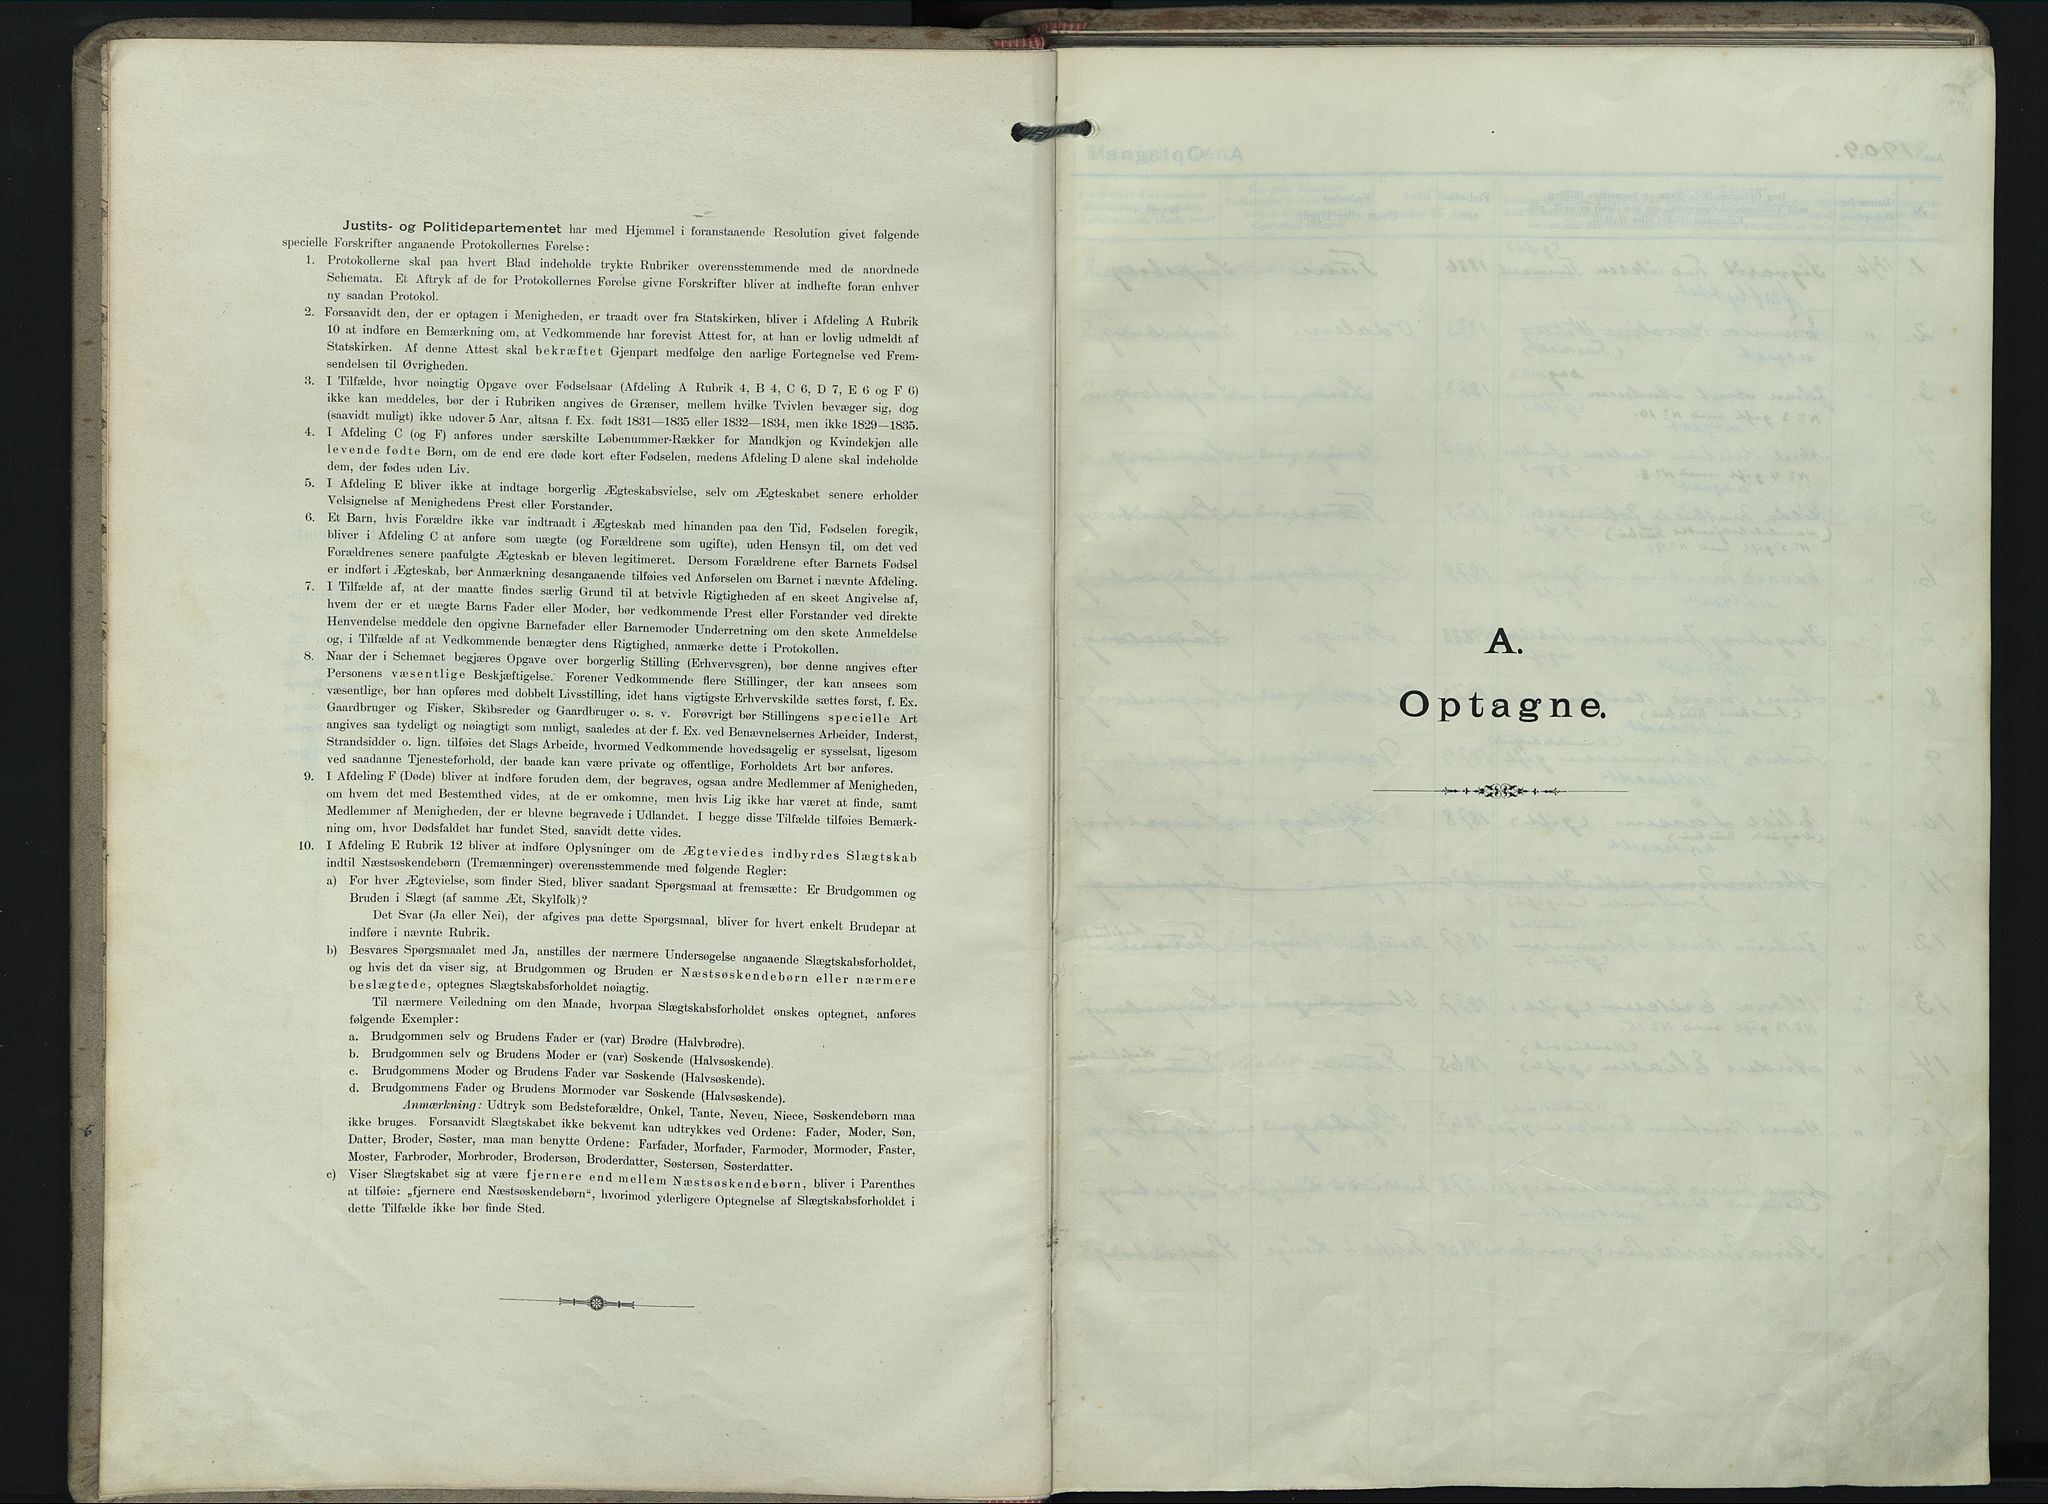 Den Evangeliske Brødremenighed i Sarpsborg, SAO/PAO-0257/F/L0001: Dissenter register no. 1, 1909-1917